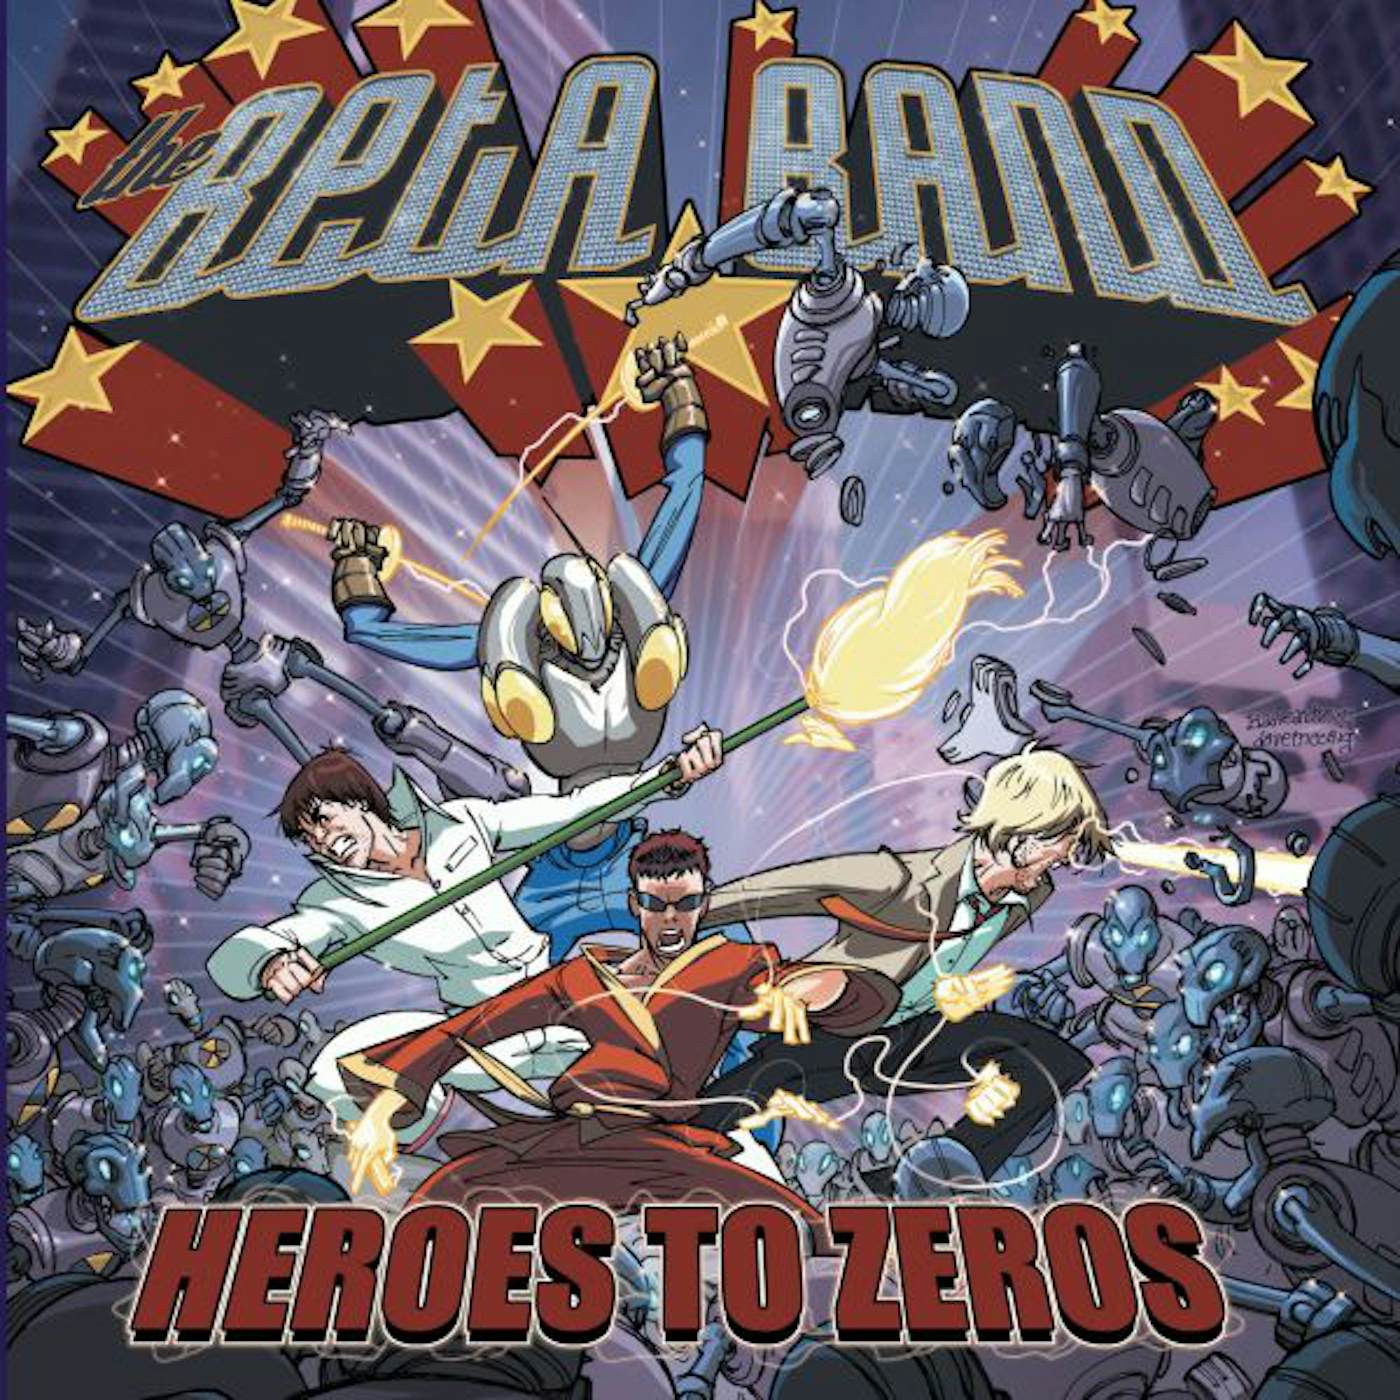 The Beta Band Heroes to Zeros Vinyl Record